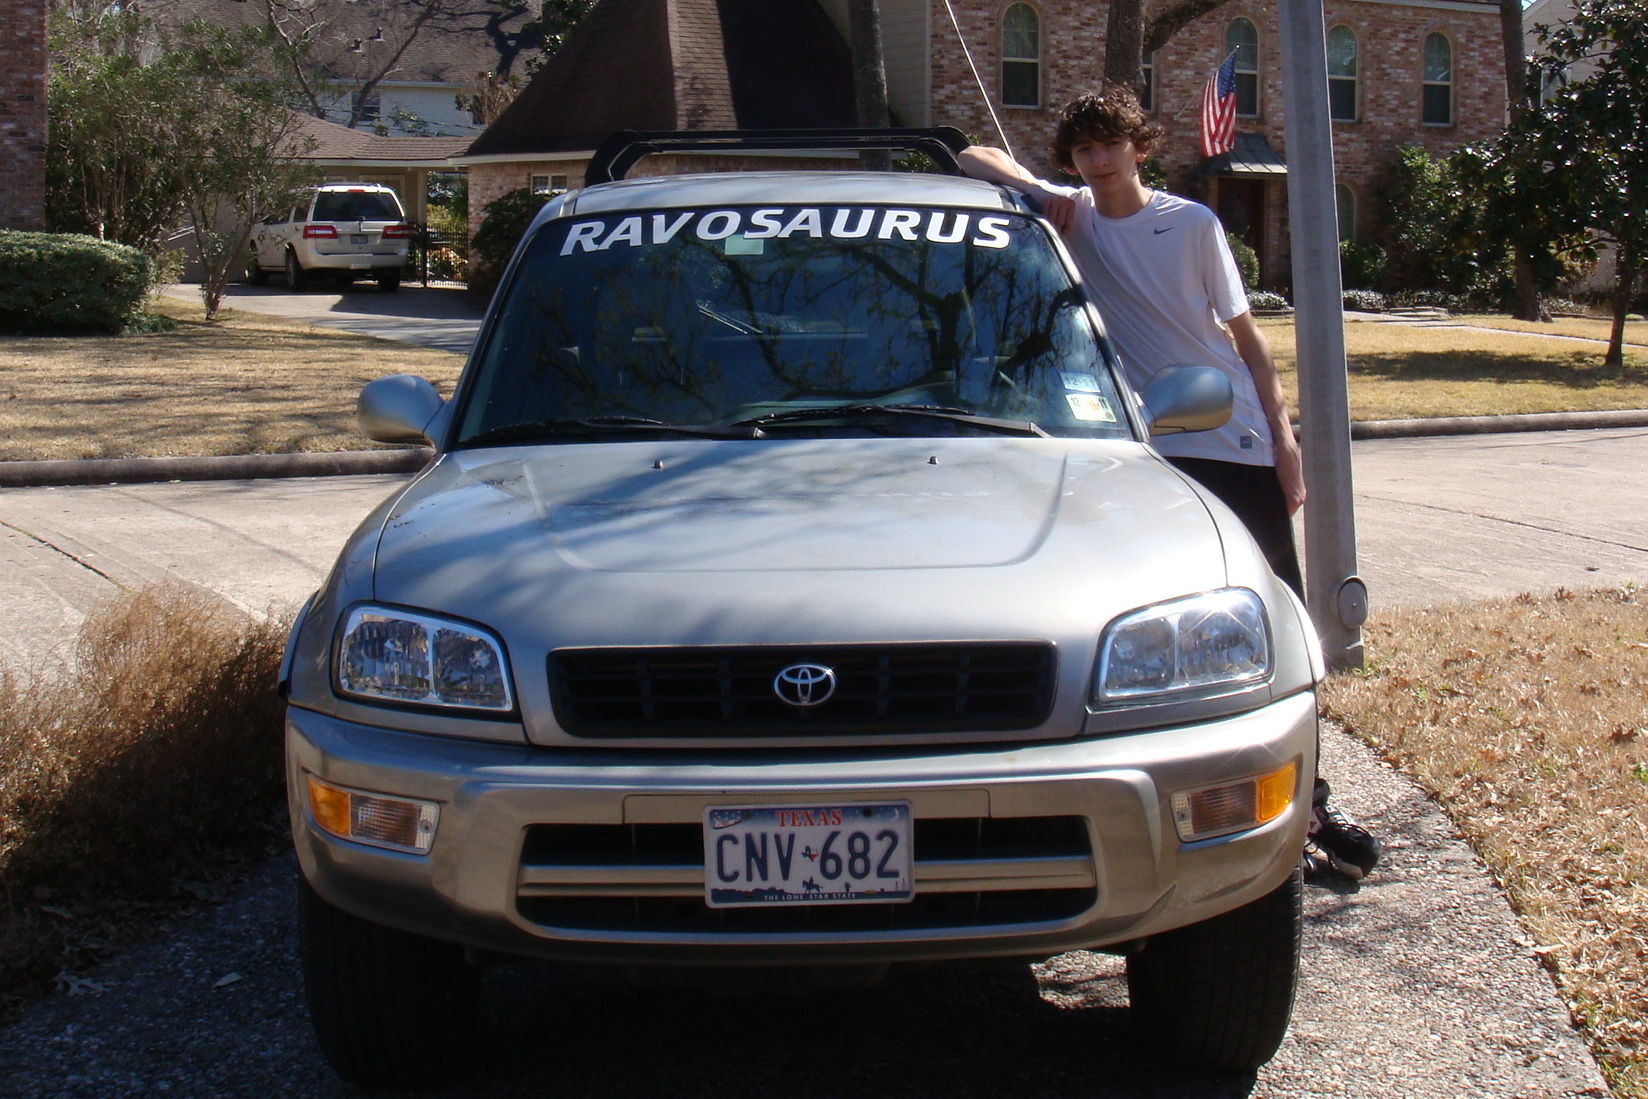 Schipul and the Ravosaurus